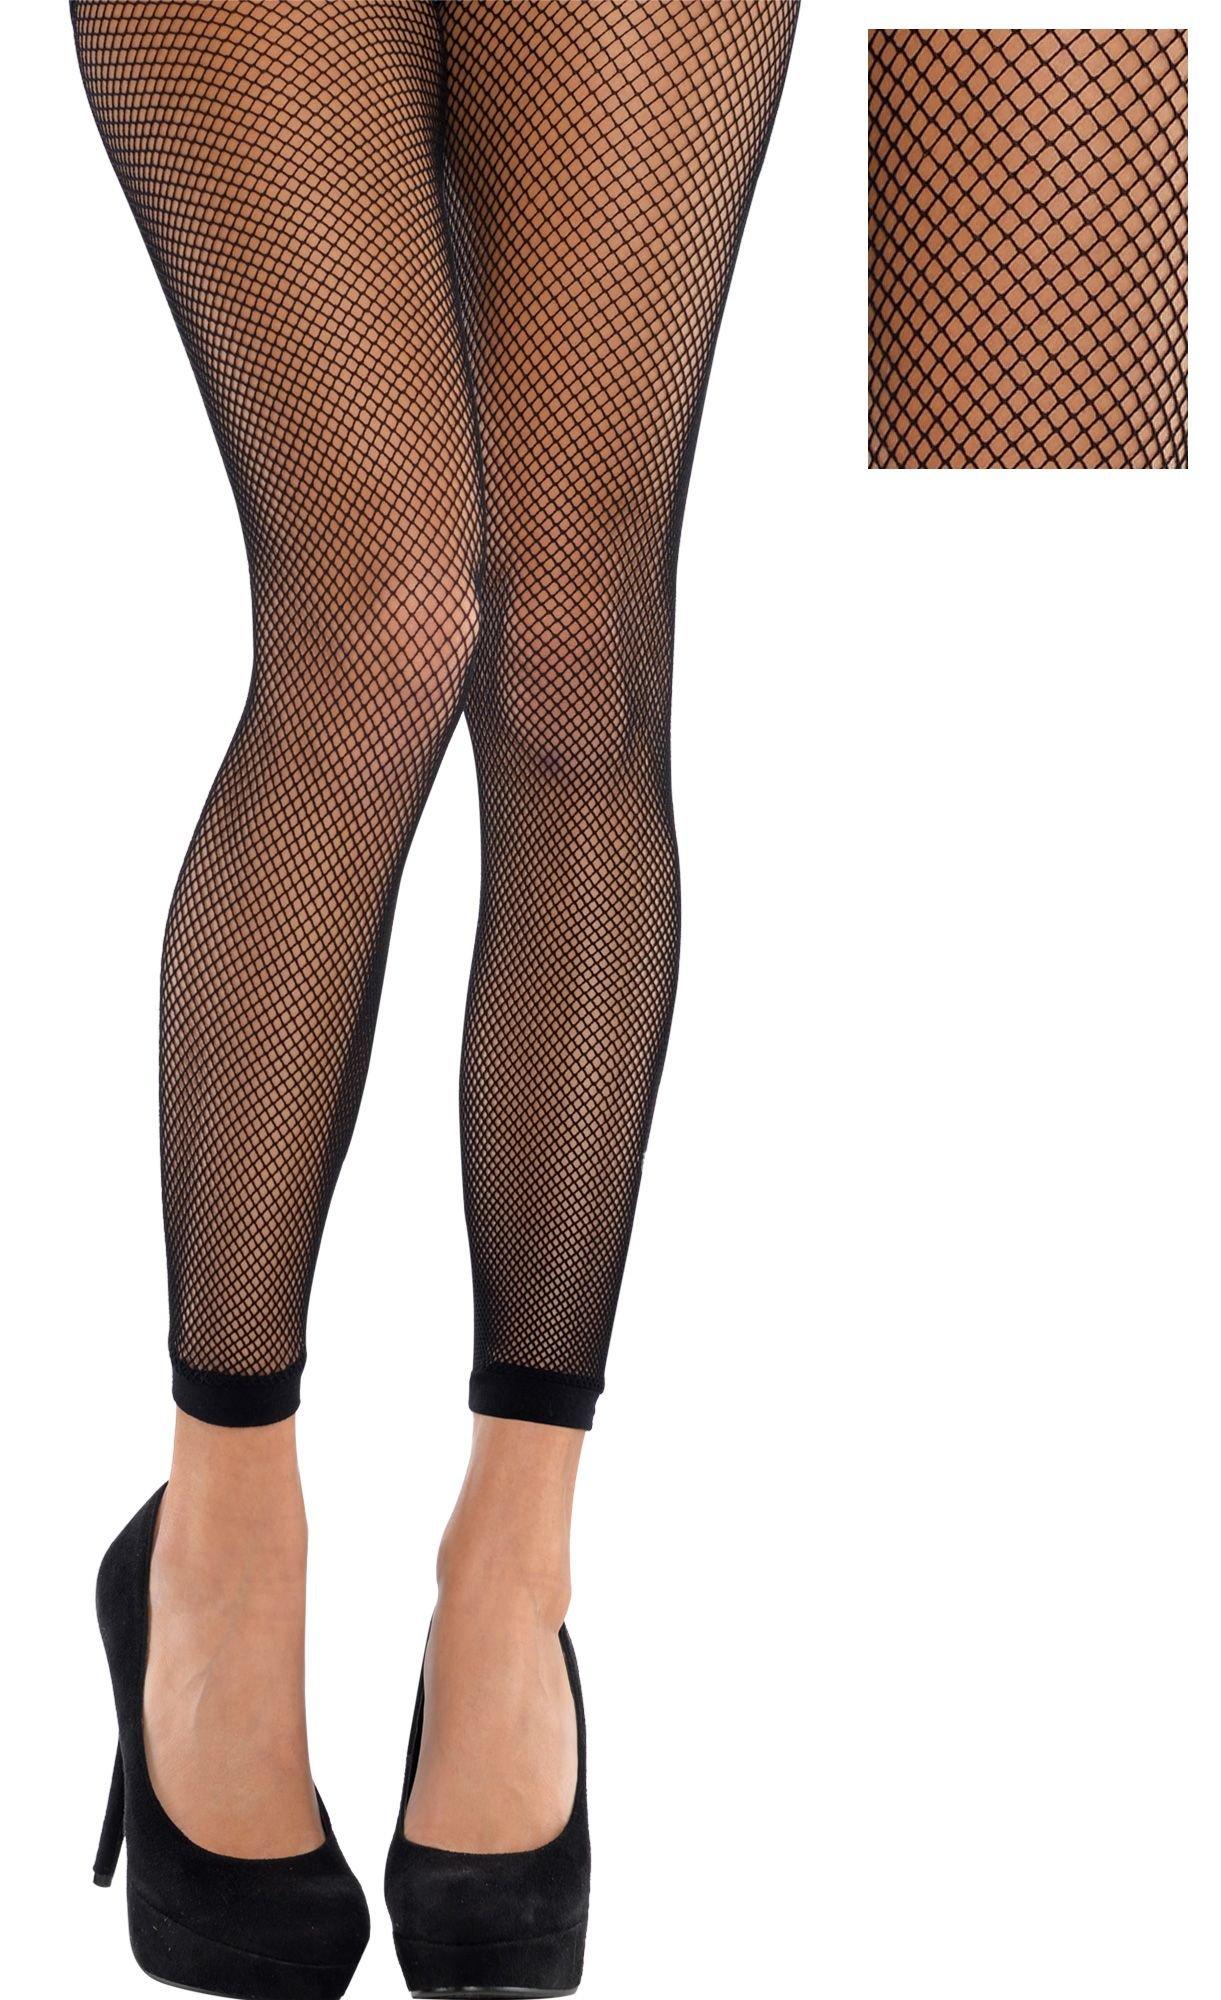 Wholesale Carnival Stockings Stylish Pantyhose & Stockings 